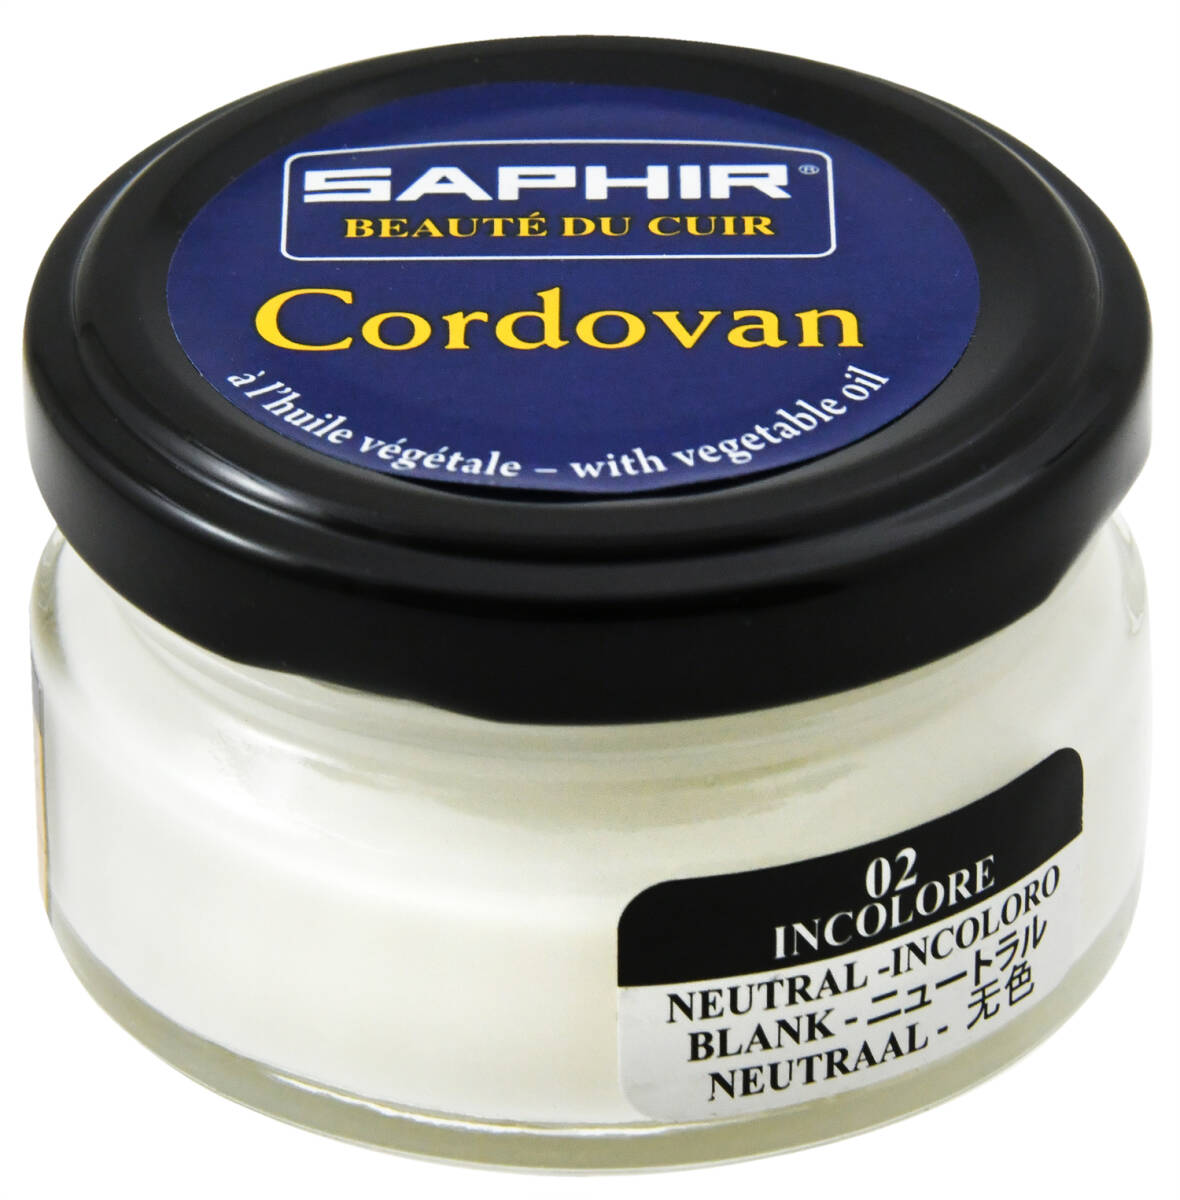  neutral less color SAPHIRsafi-ru cordovan cream 50ml horse leather for ke AOI ru code Van shoes cream 